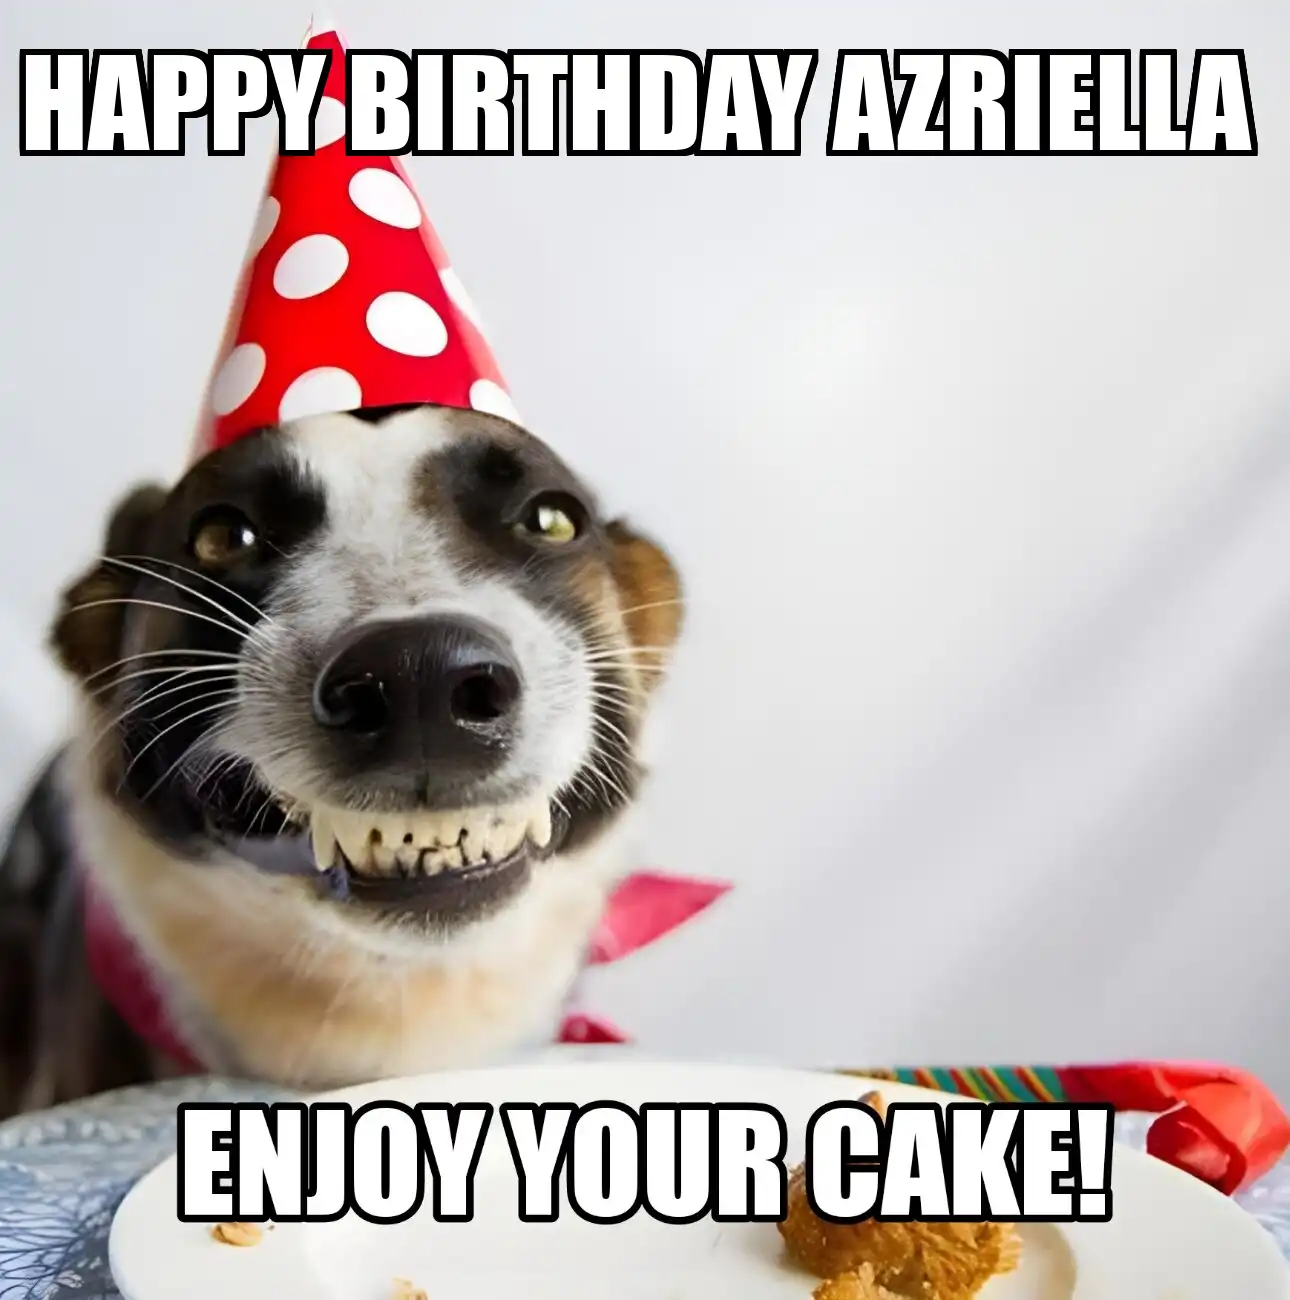 Happy Birthday Azriella Enjoy Your Cake Dog Meme